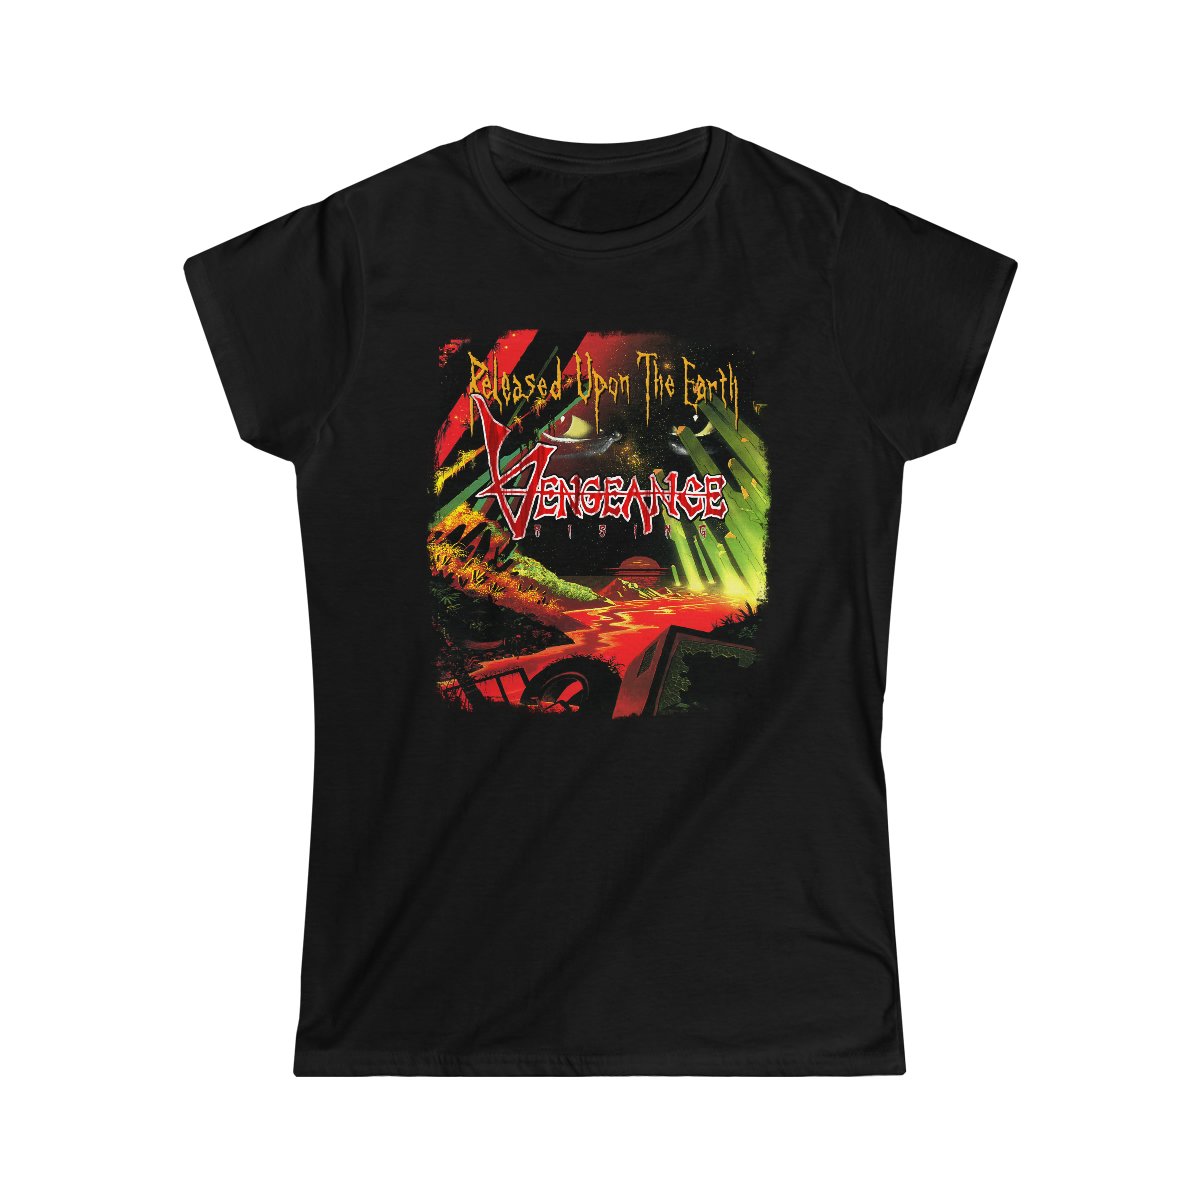 Vengeance Rising – Released Upon The Earth Women’s Short Sleeve Tshirt 64000L